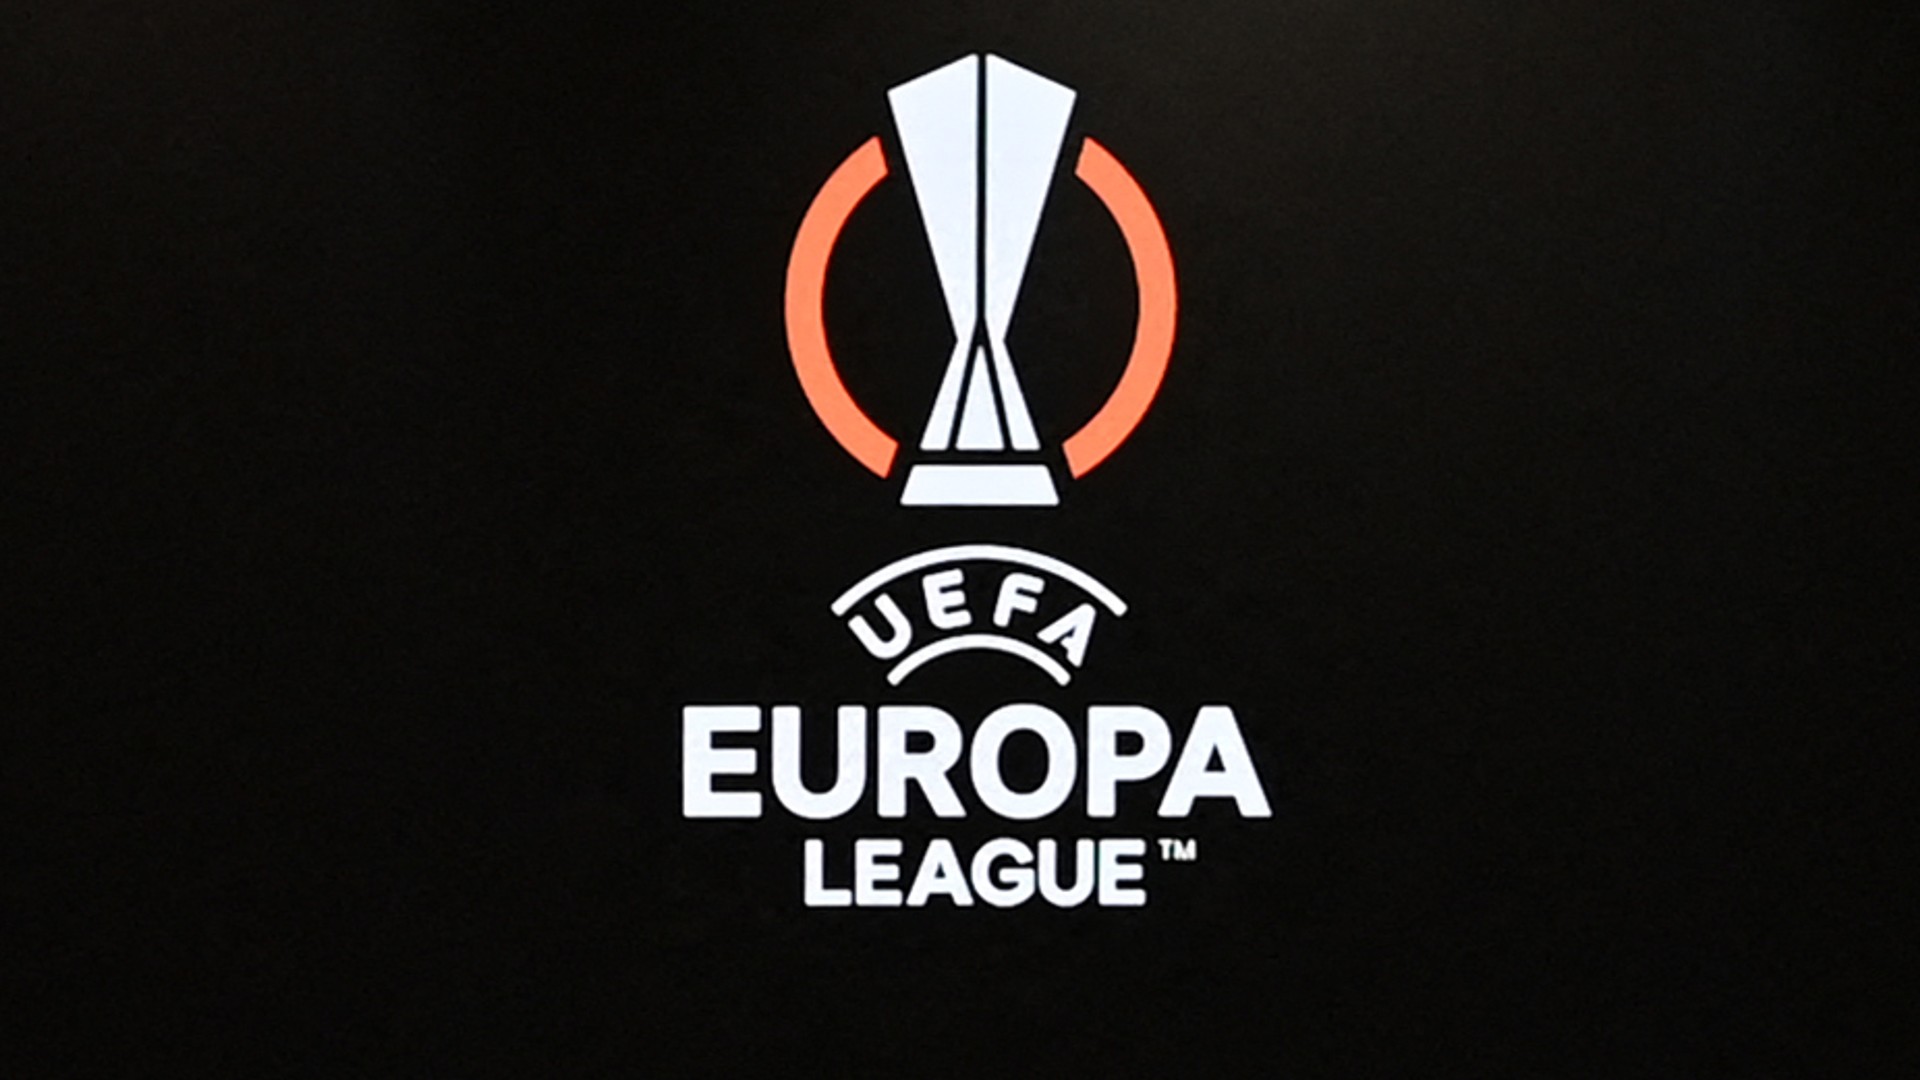 MOSCOW, RUSSIA, NOVEMBER 24, 2021. The 2021/22 UEFA Europa League